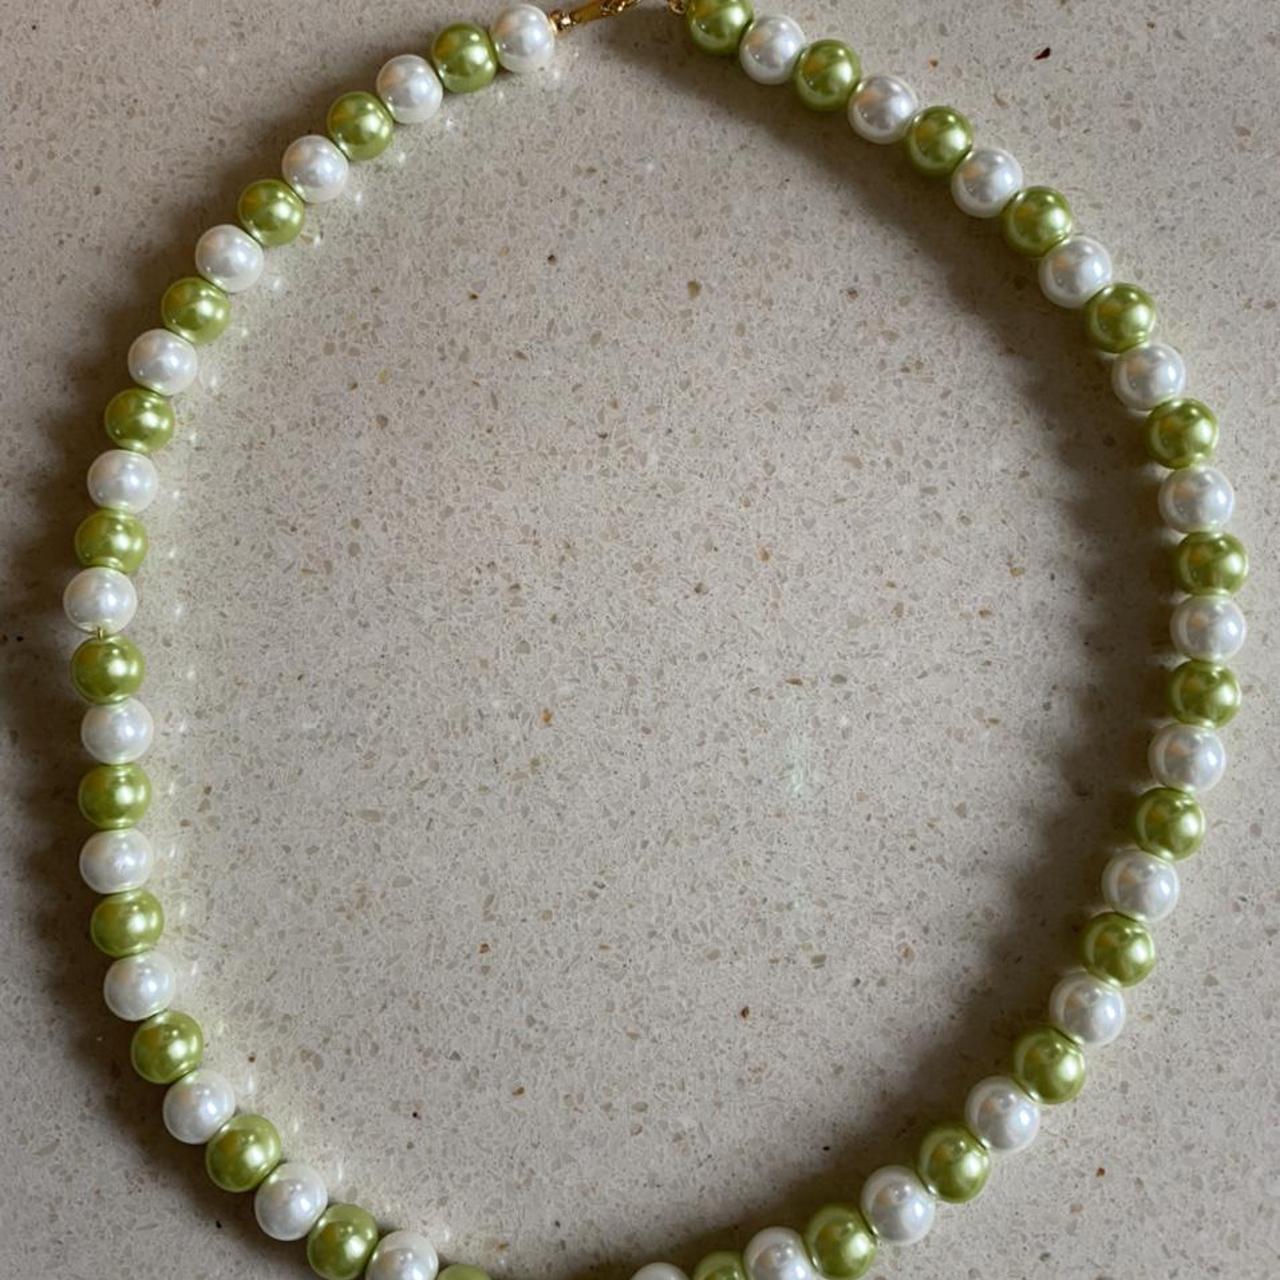 Women's White and Green Jewellery